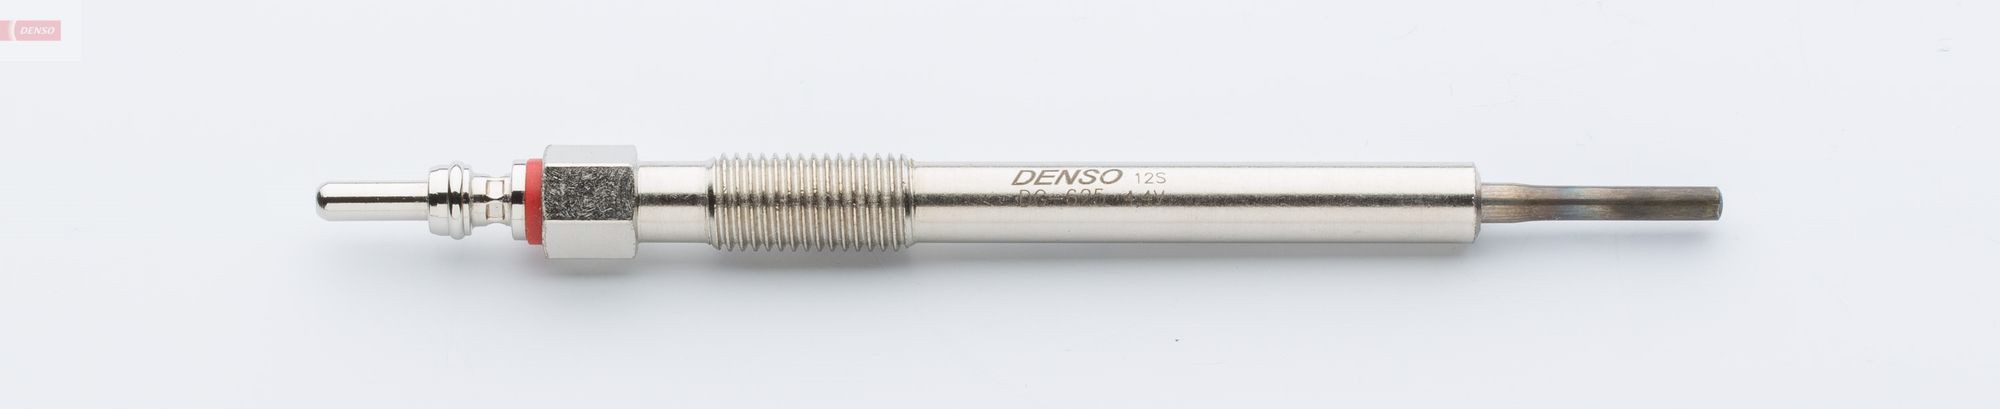 Glow plug DG-625 from DENSO